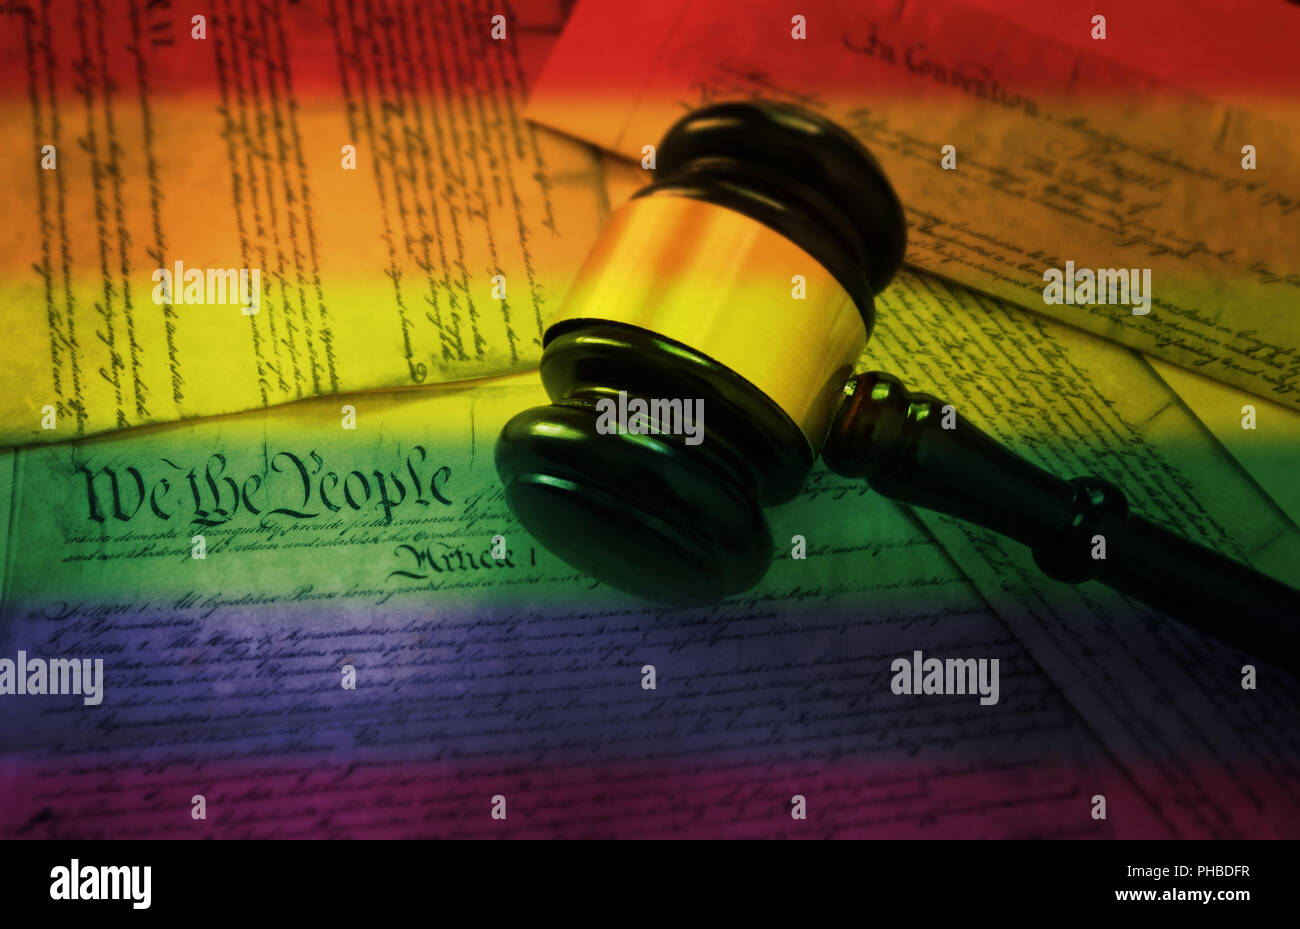 Rainbow flag gavel on America's Constitution Stock Photo